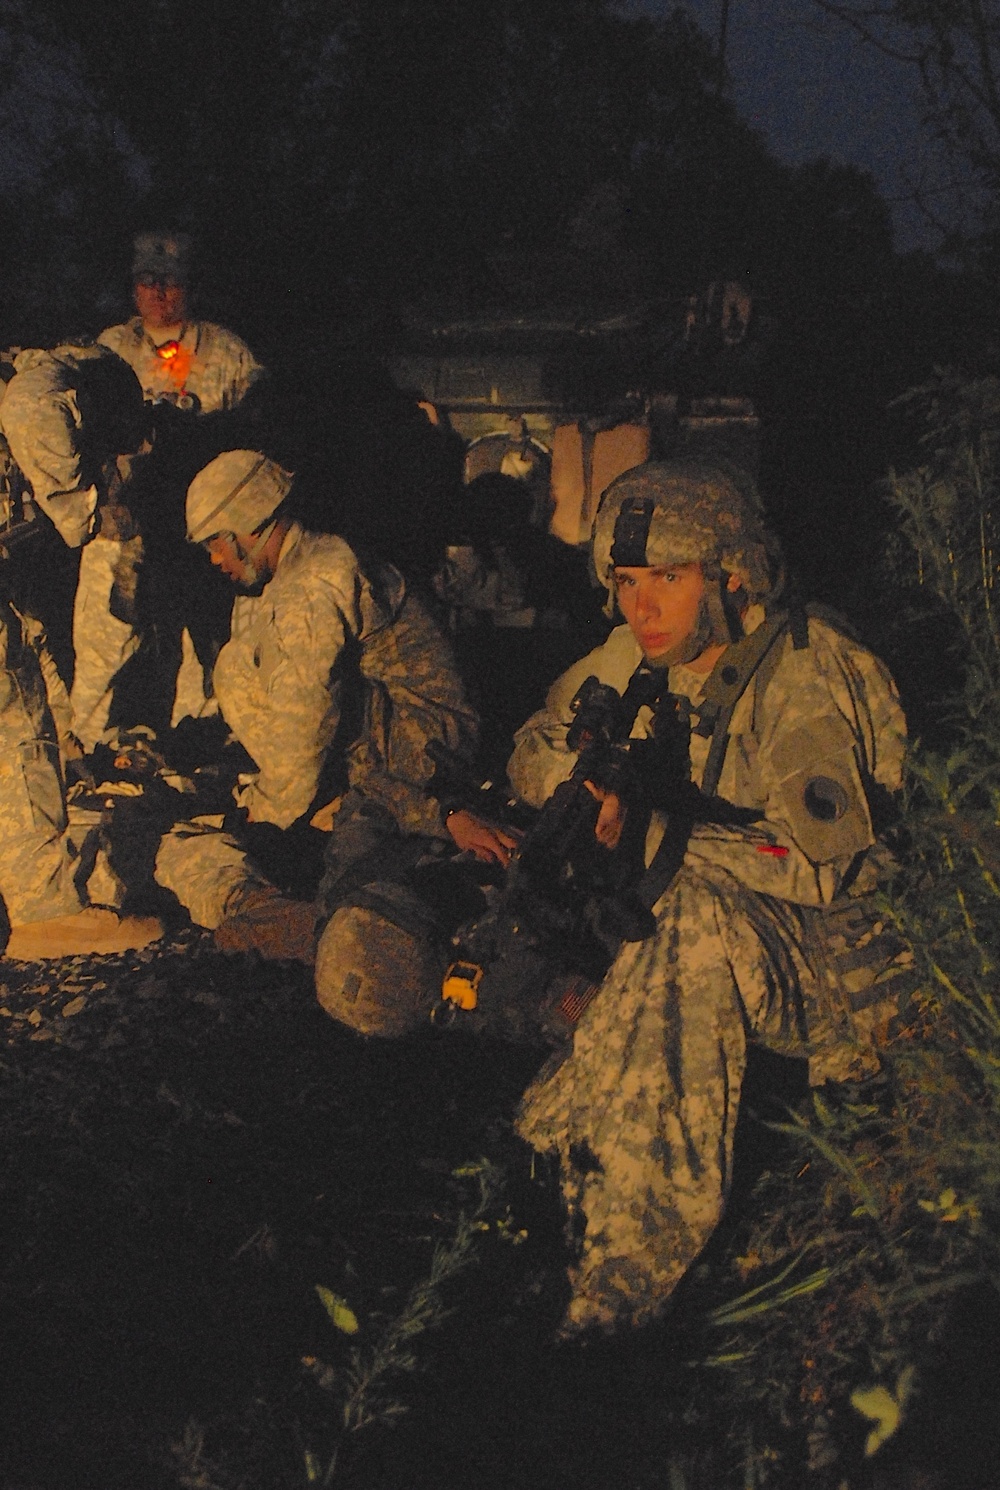 Combat service support troops evaluated on warrior tasks